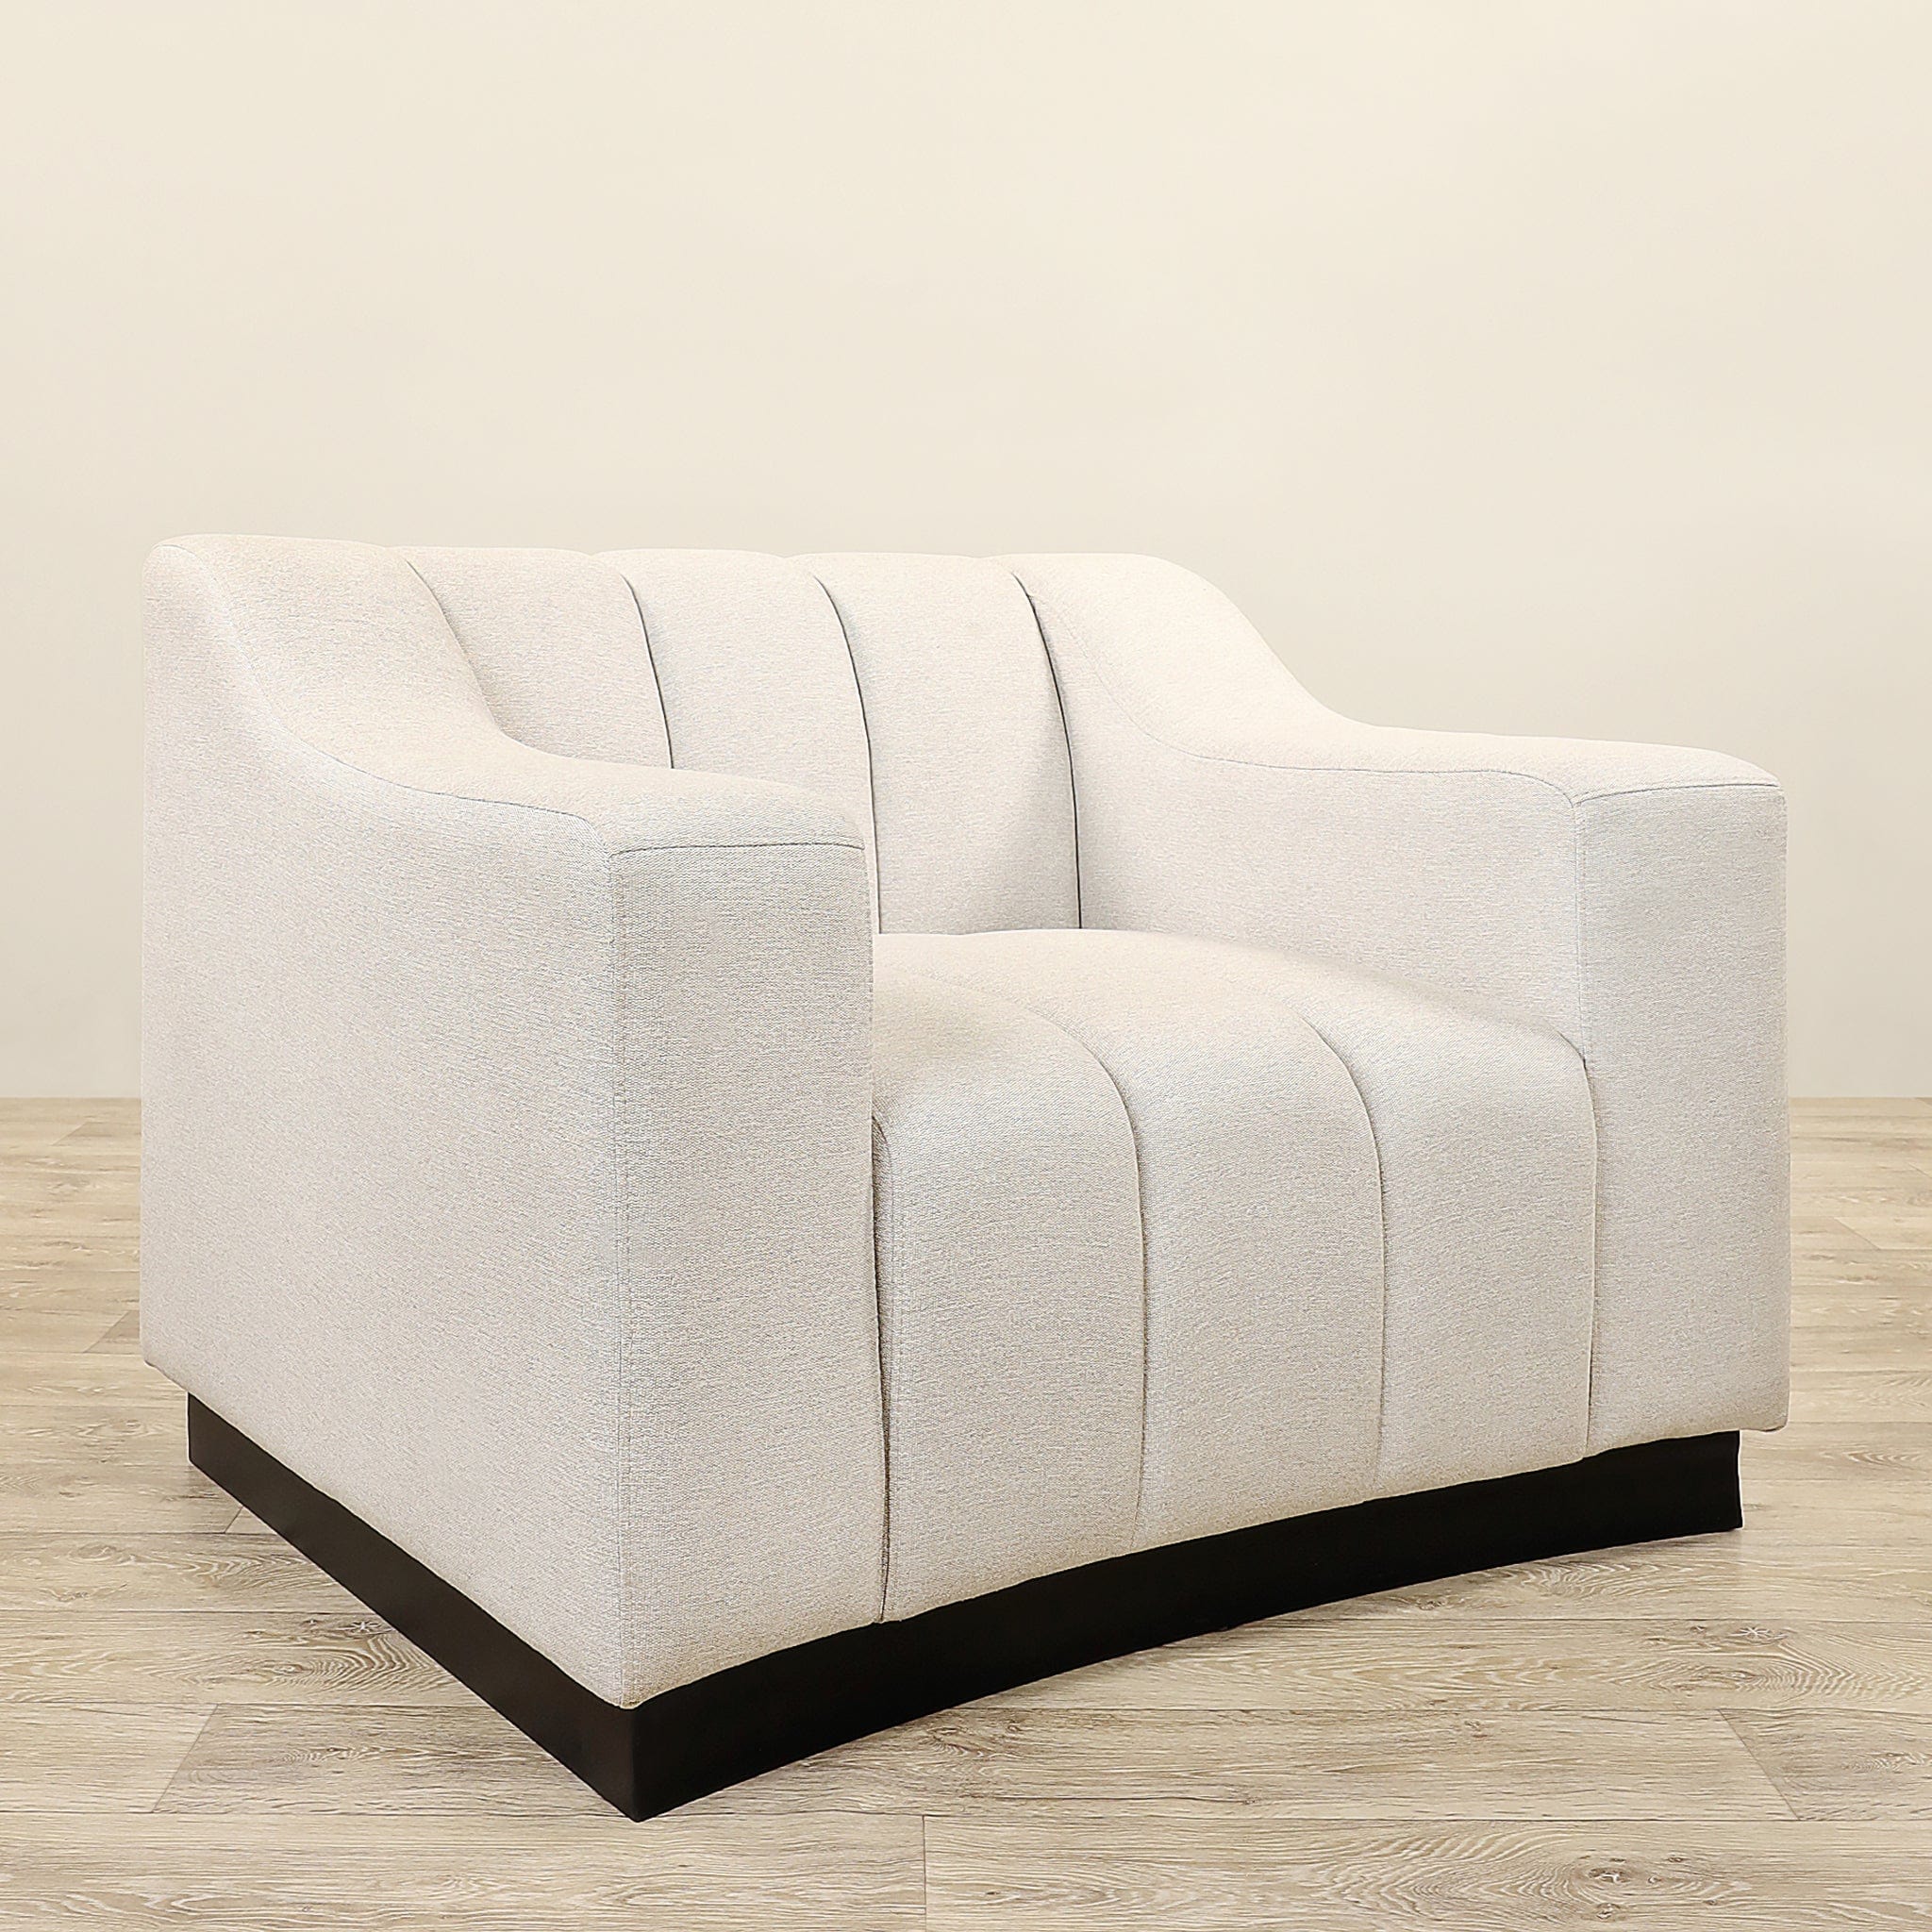 Fabio <br>Armchair Lounge Chair - Bloomr